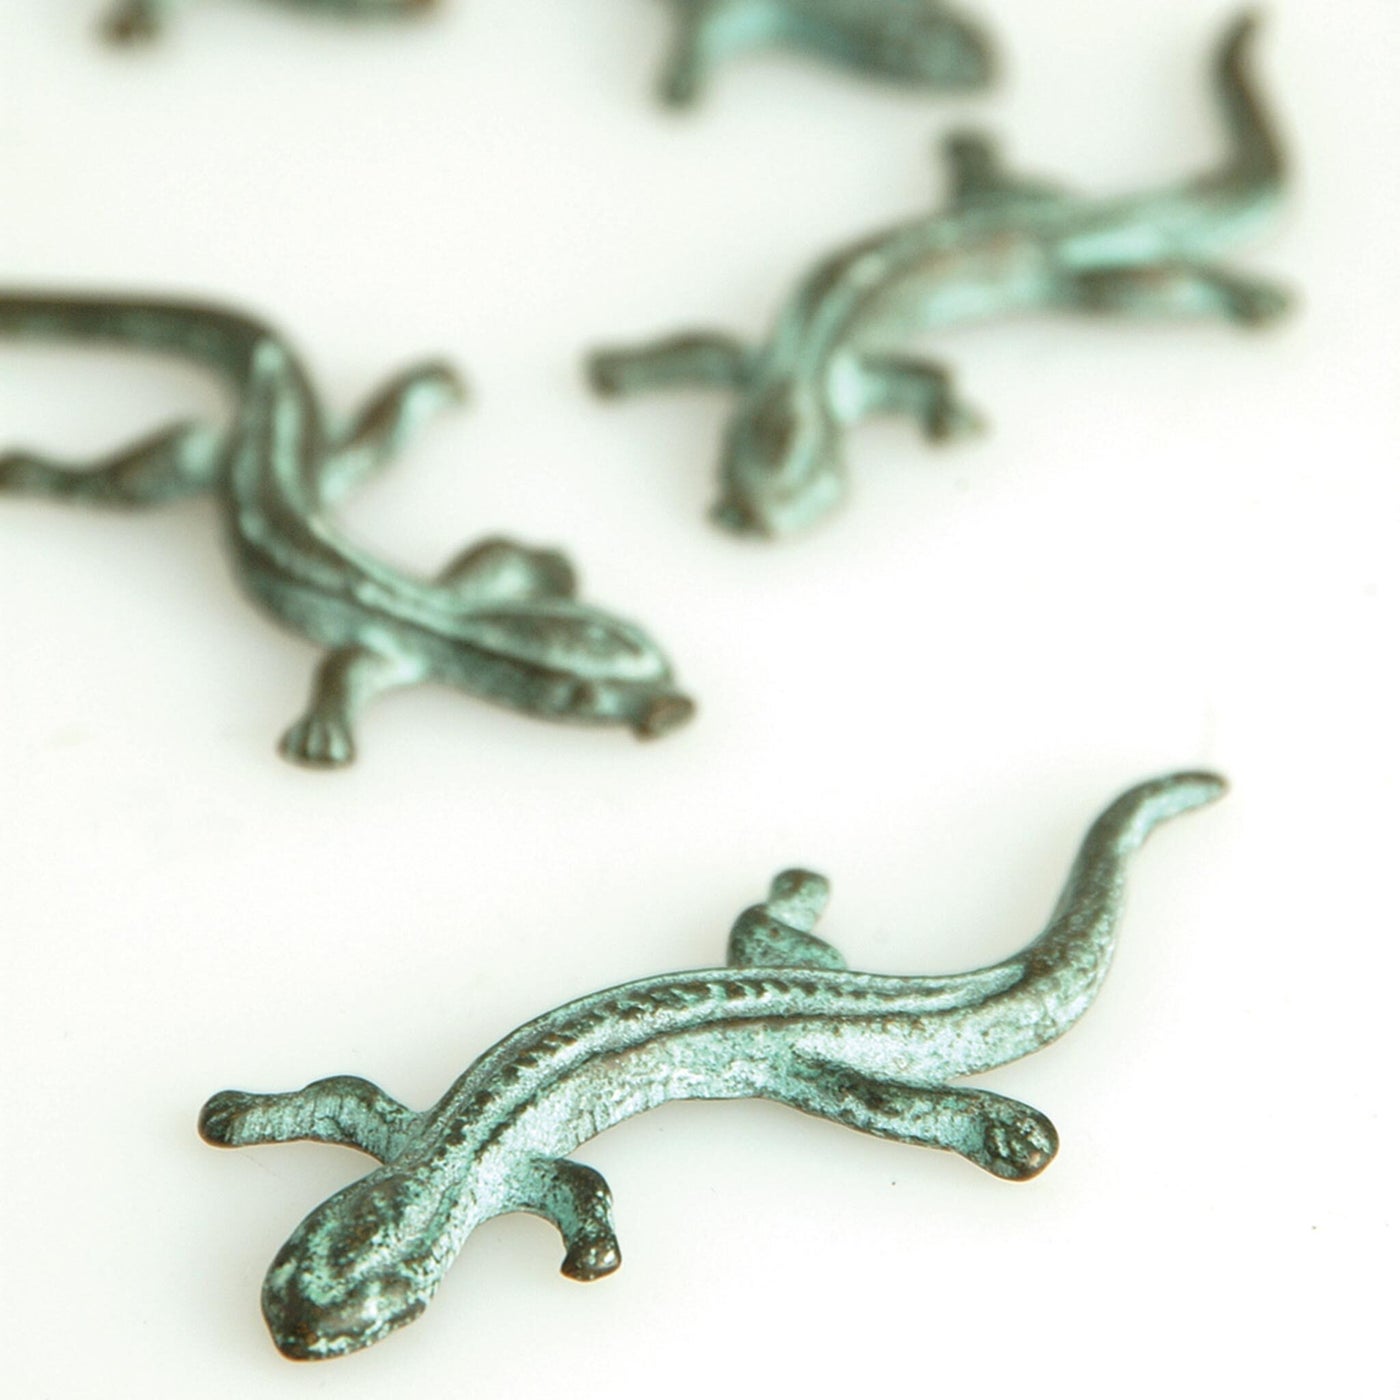 Salamander Minimals Mini Figurines, Pack of 6